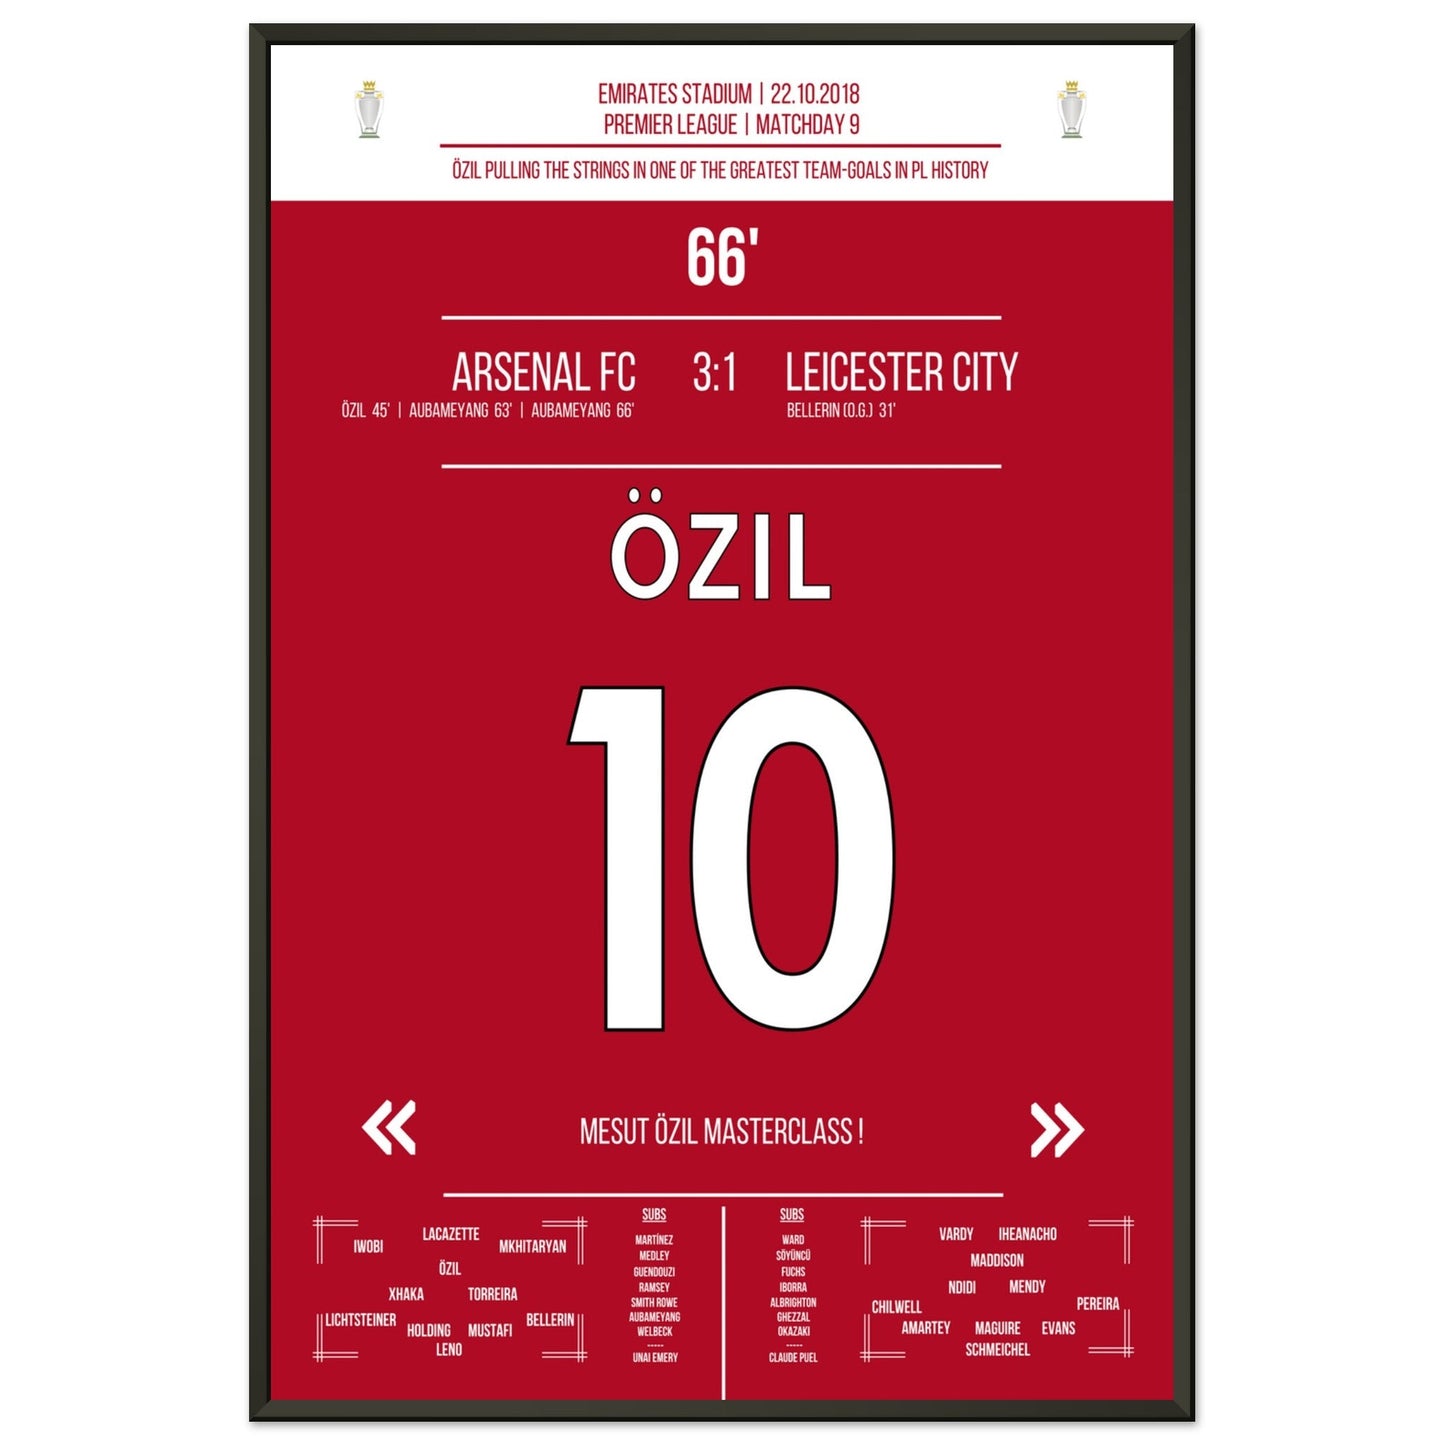 Mesut Özil Masterclass gegen Leicester in 2018